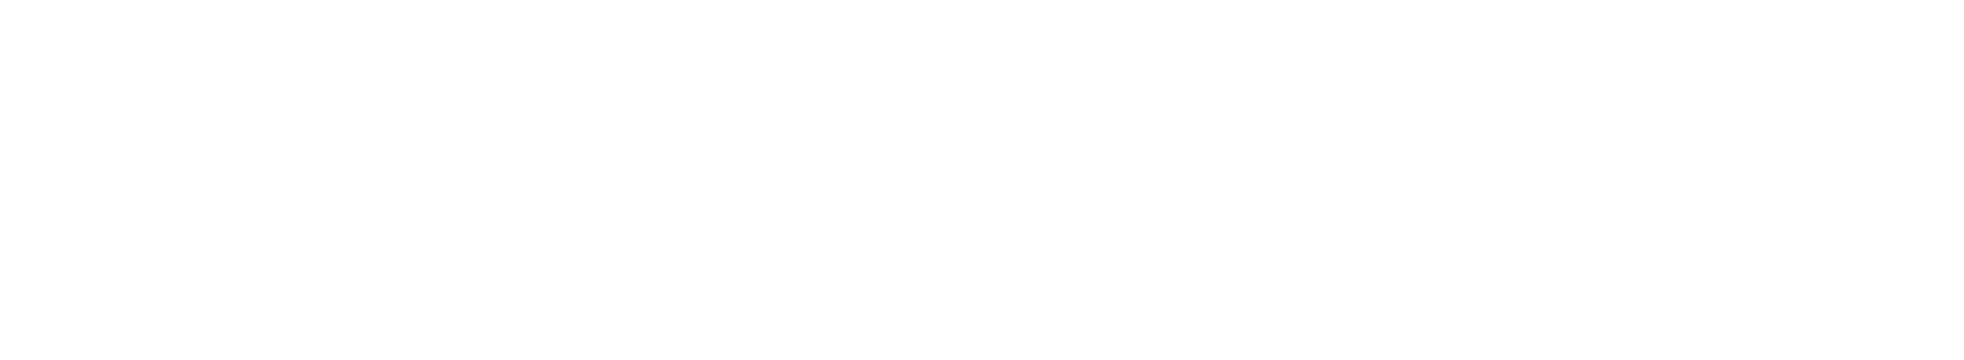 Maverick Lending Solutions LLC